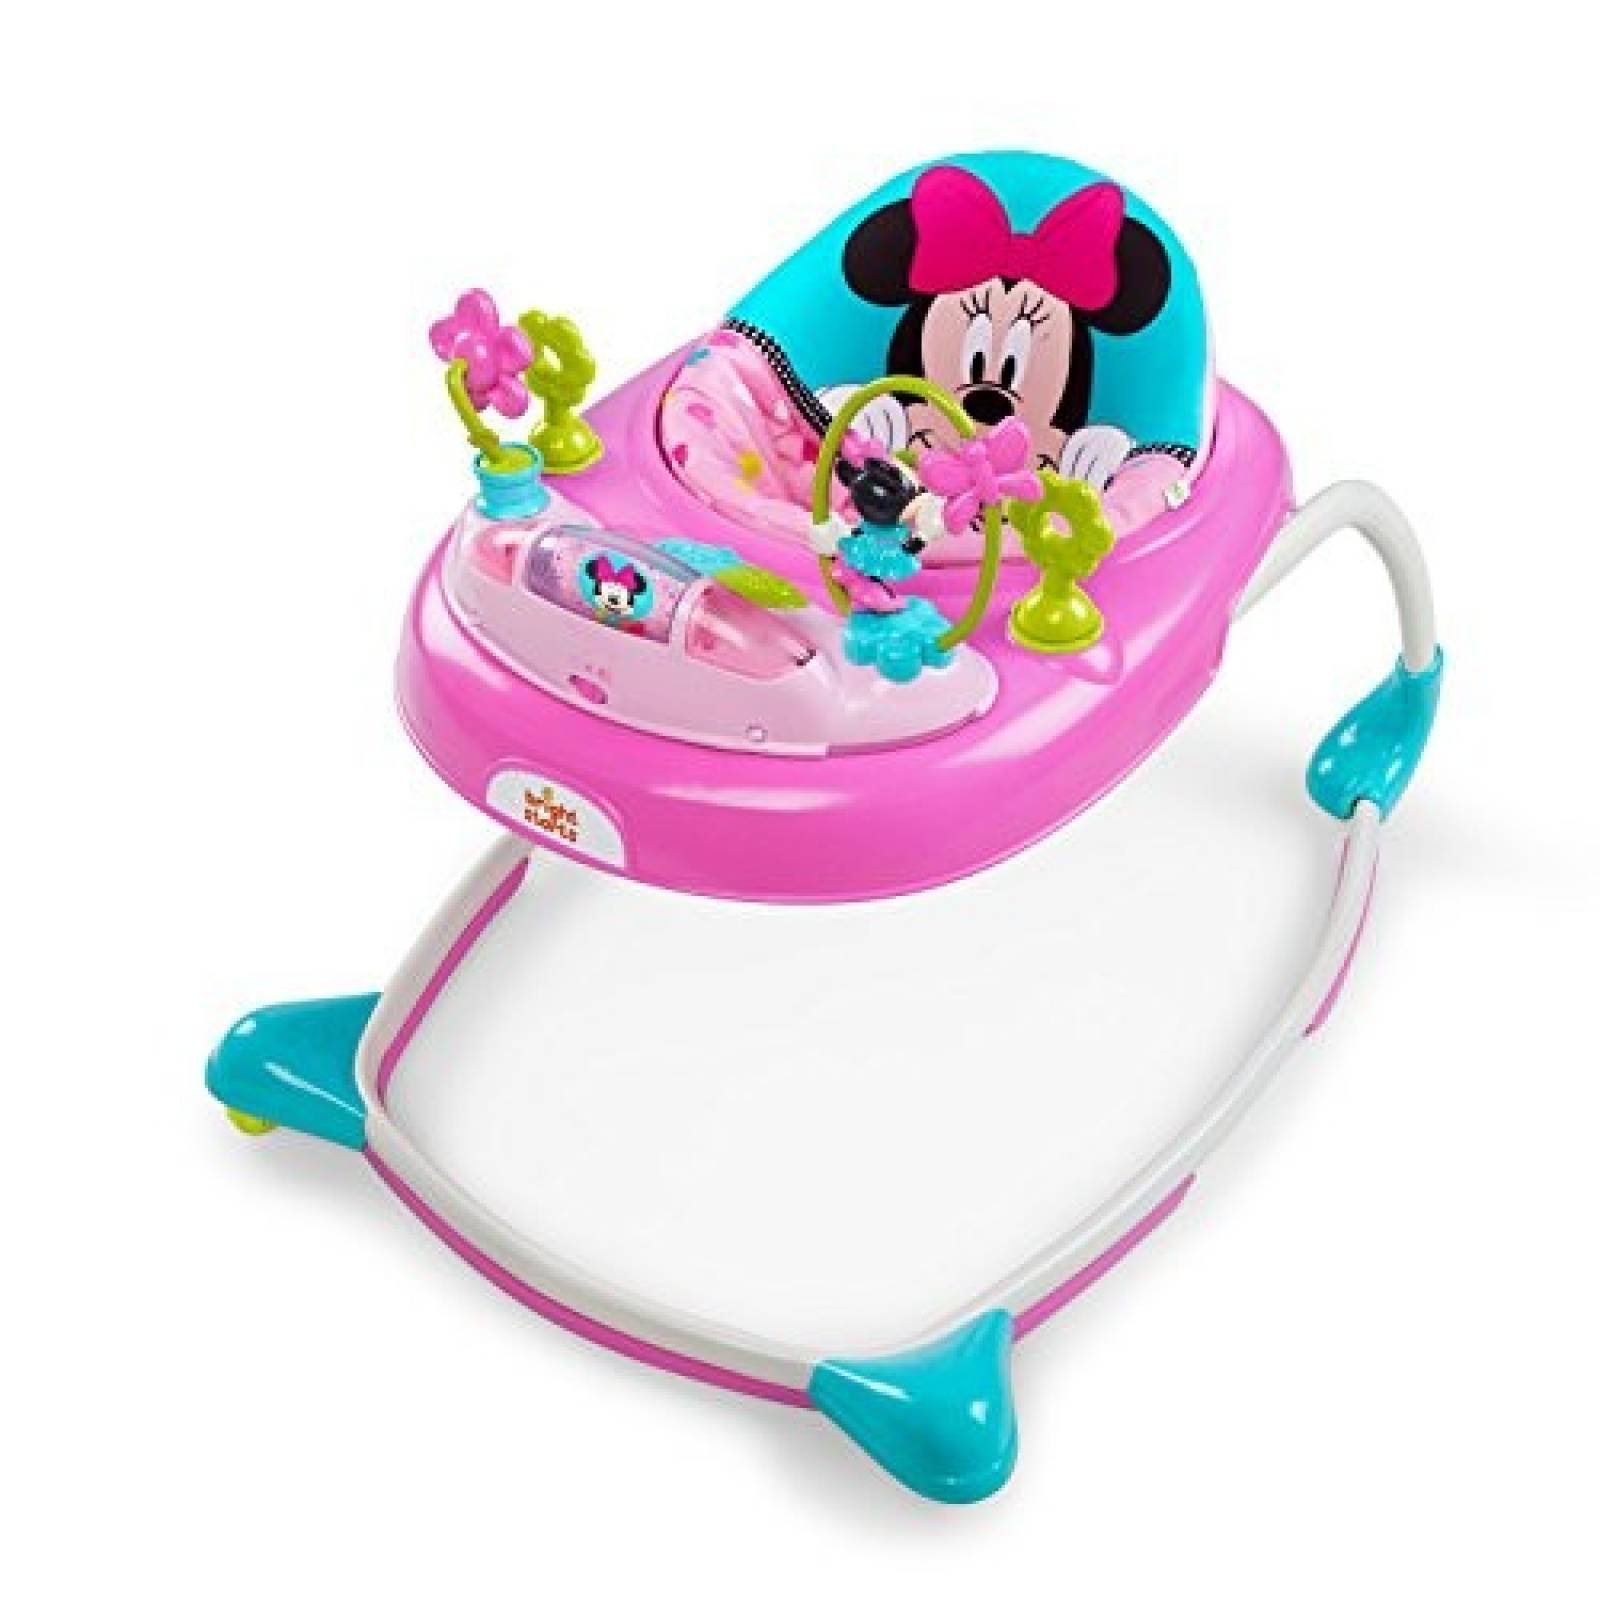 Andadera Disney Disney con juguetes para bebés -Rosa